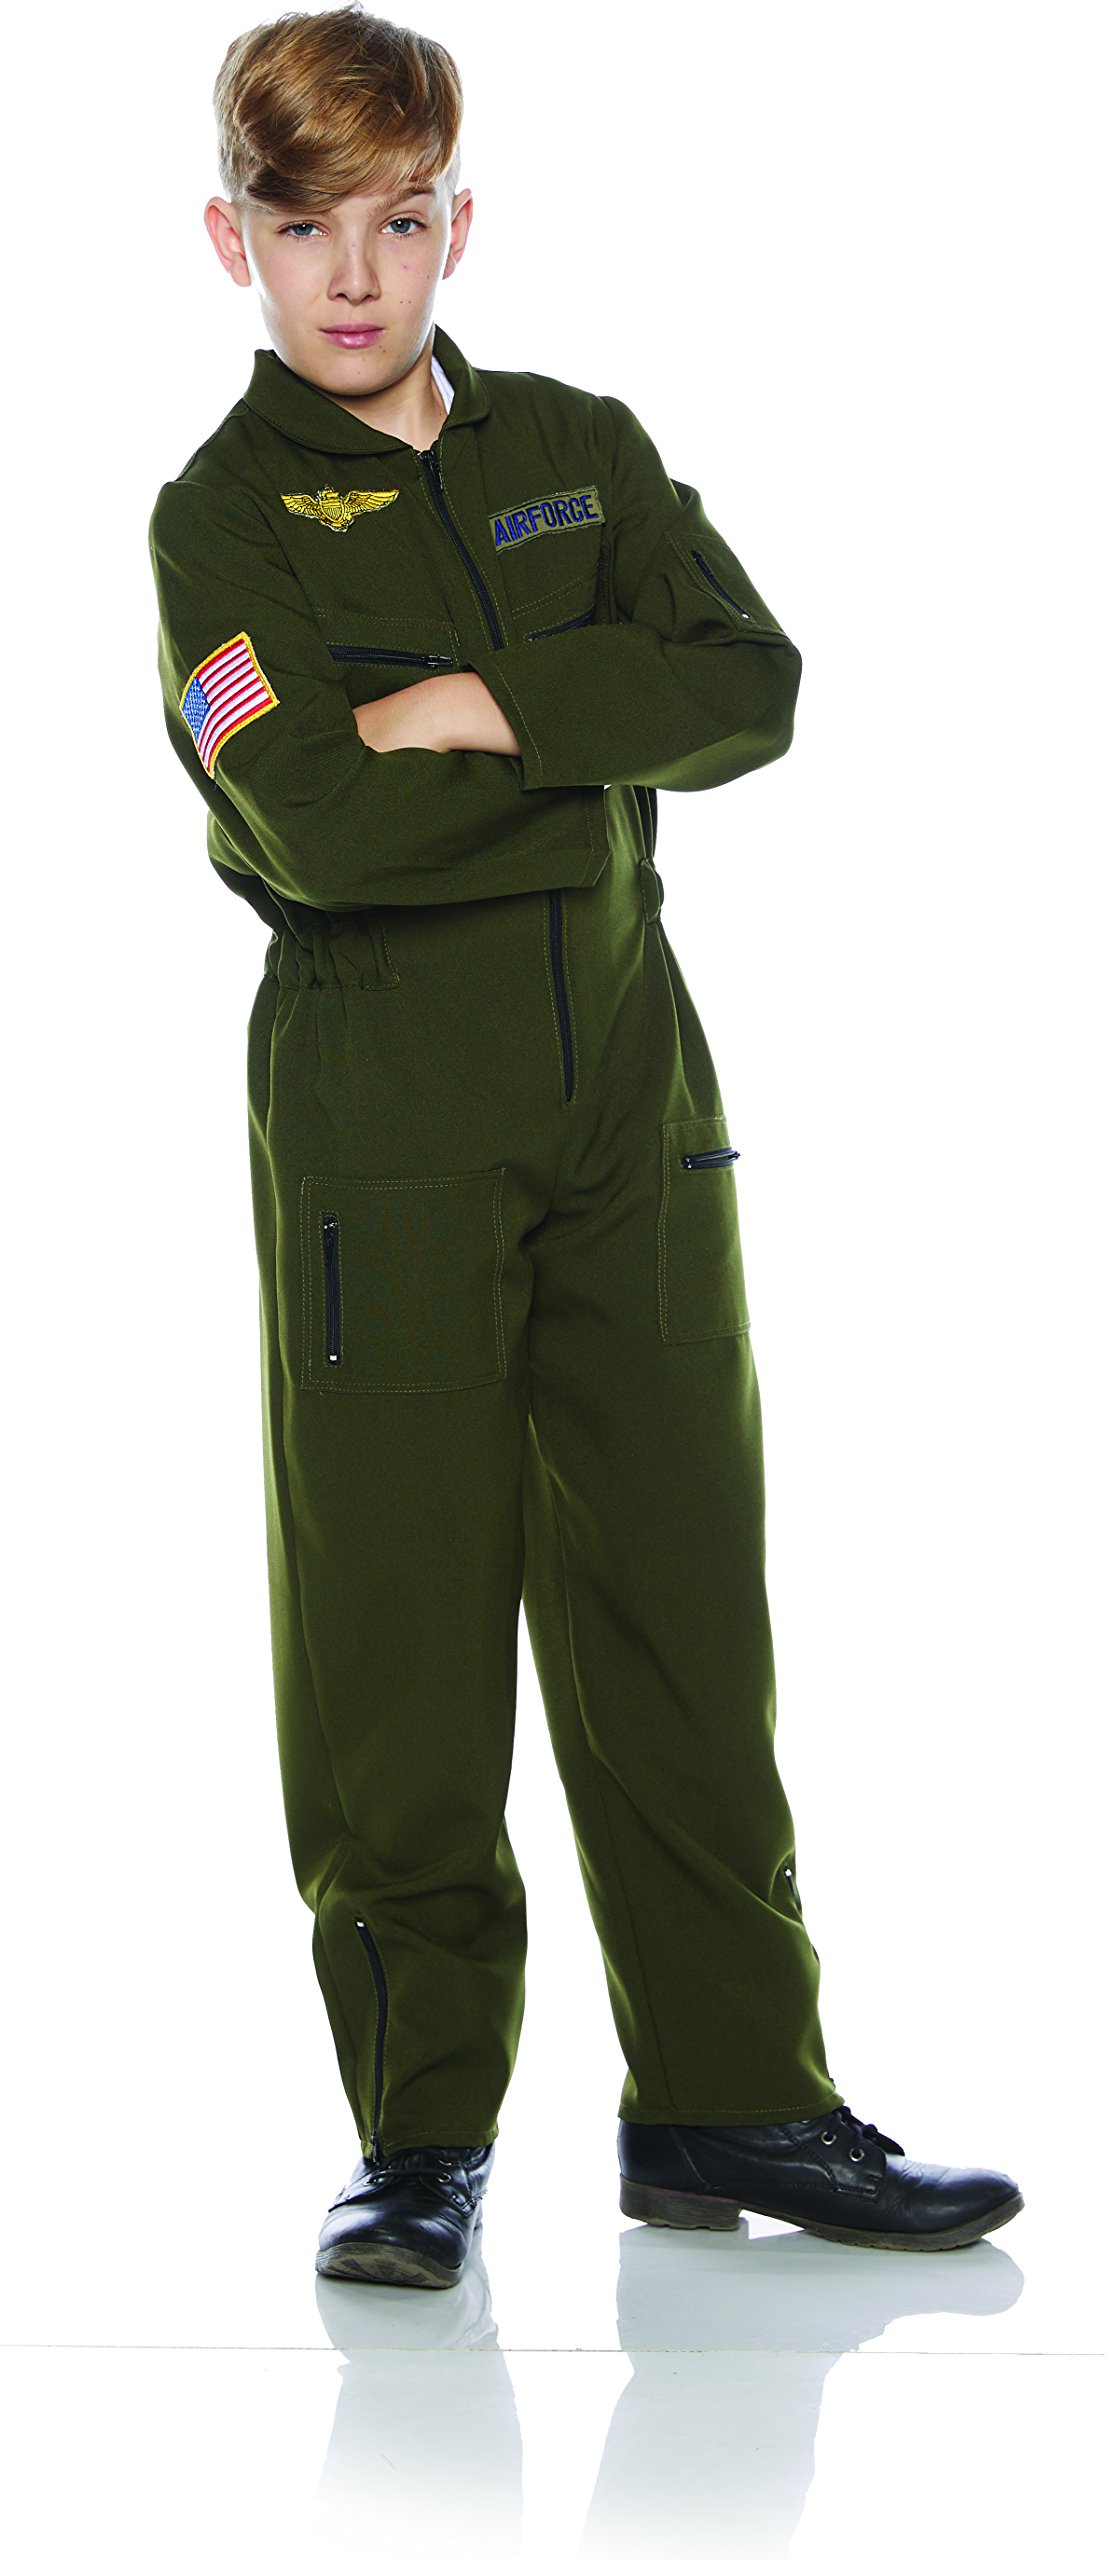 UNDERWRAPS Kid's Children's Air Force Flight Suit Costume - Khaki Childrens Costume, Green, Small